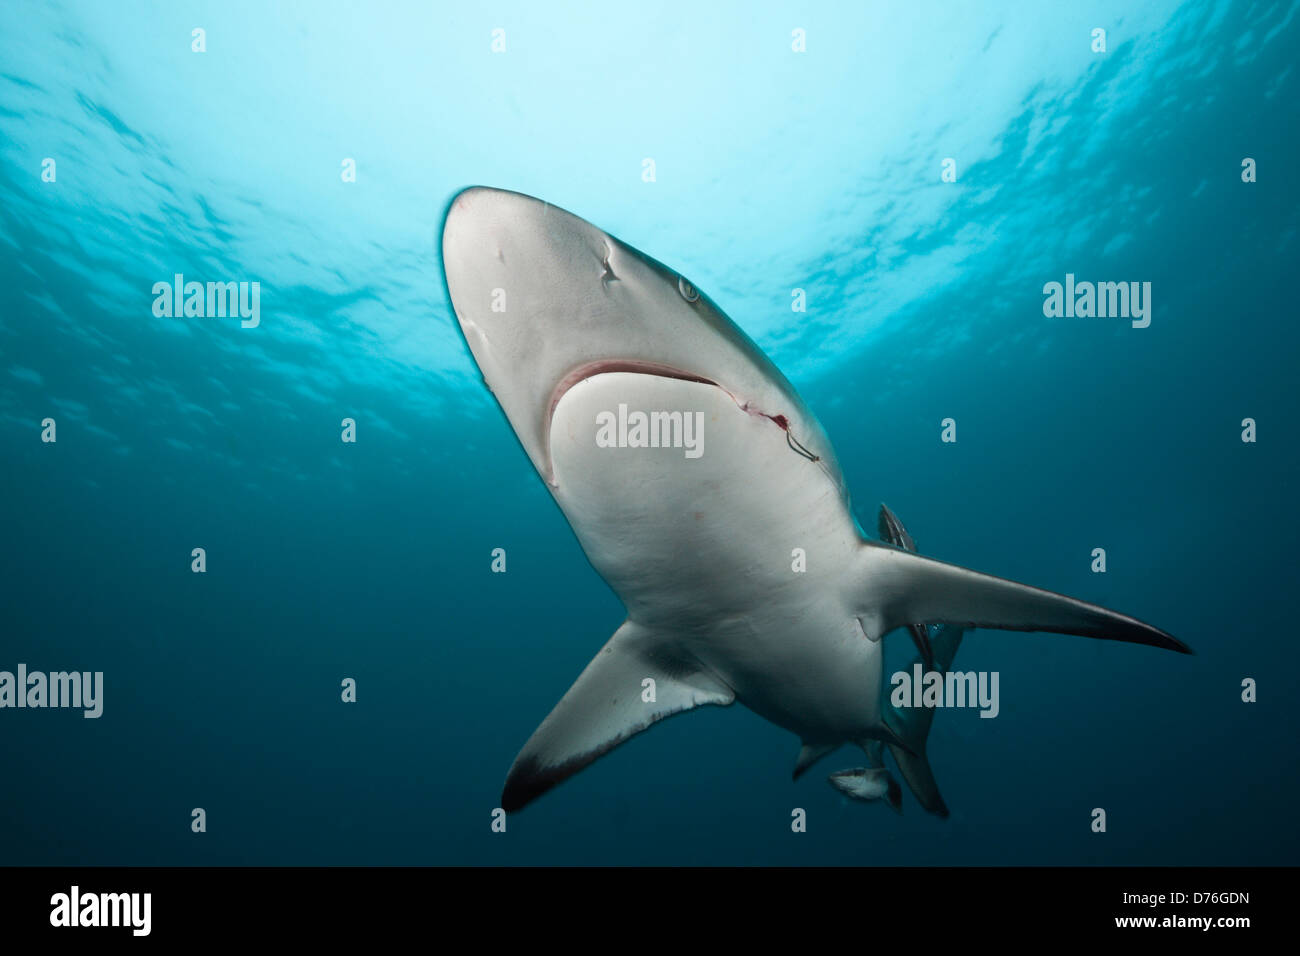 Blacktip Shark, Carcharhinus limbatus, Aliwal Shoal, océan Indien, Afrique du Sud Banque D'Images